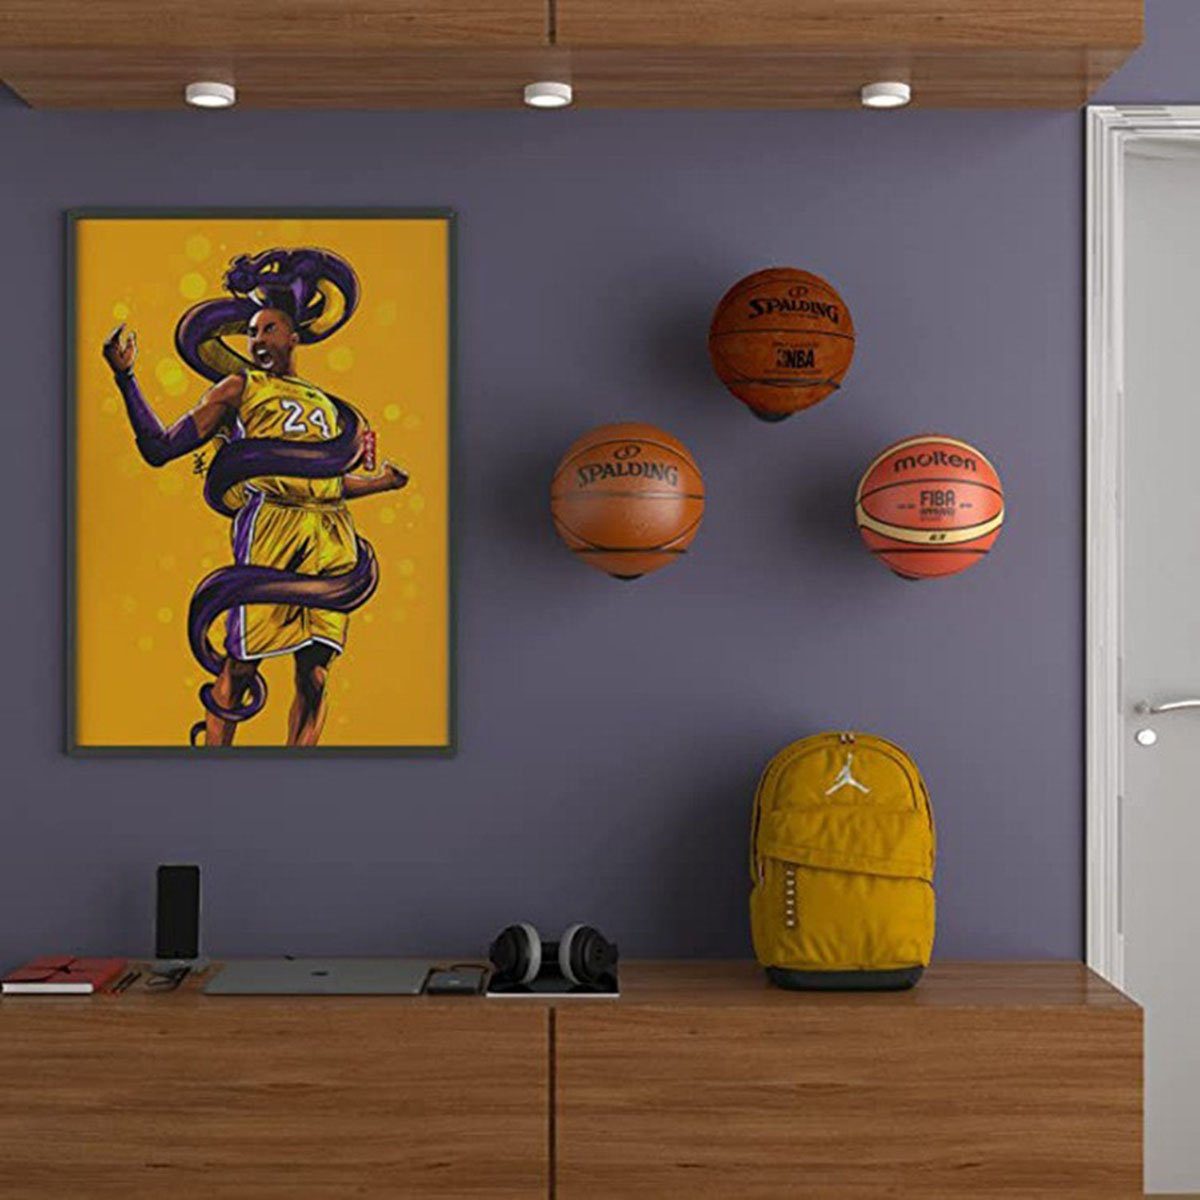 Montiert Basketballständer Wandhalterung CTGtree Rack 2 (2-St) Ball Stücke Ball Wandhalterung